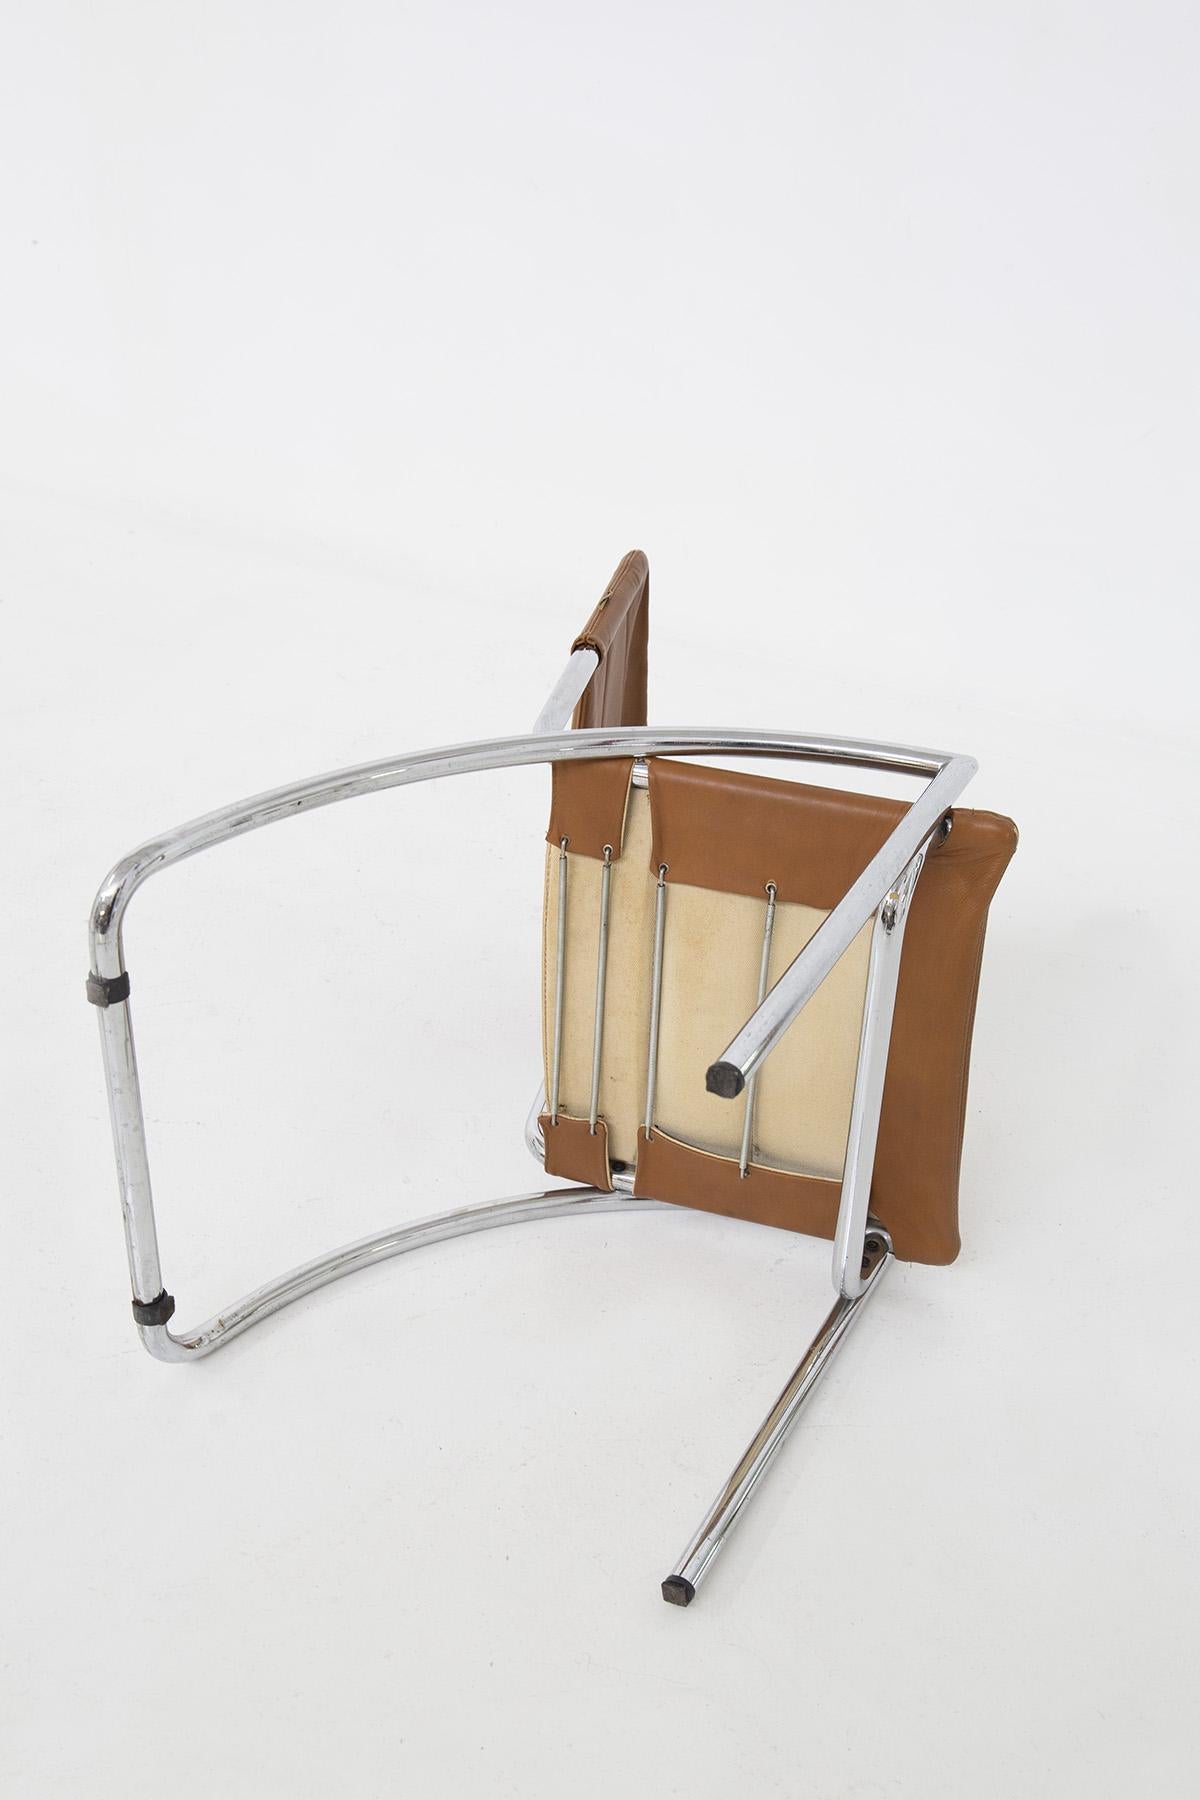 Gae Aulenti Chairs by Elam Model Lira Set of Four, Published 4